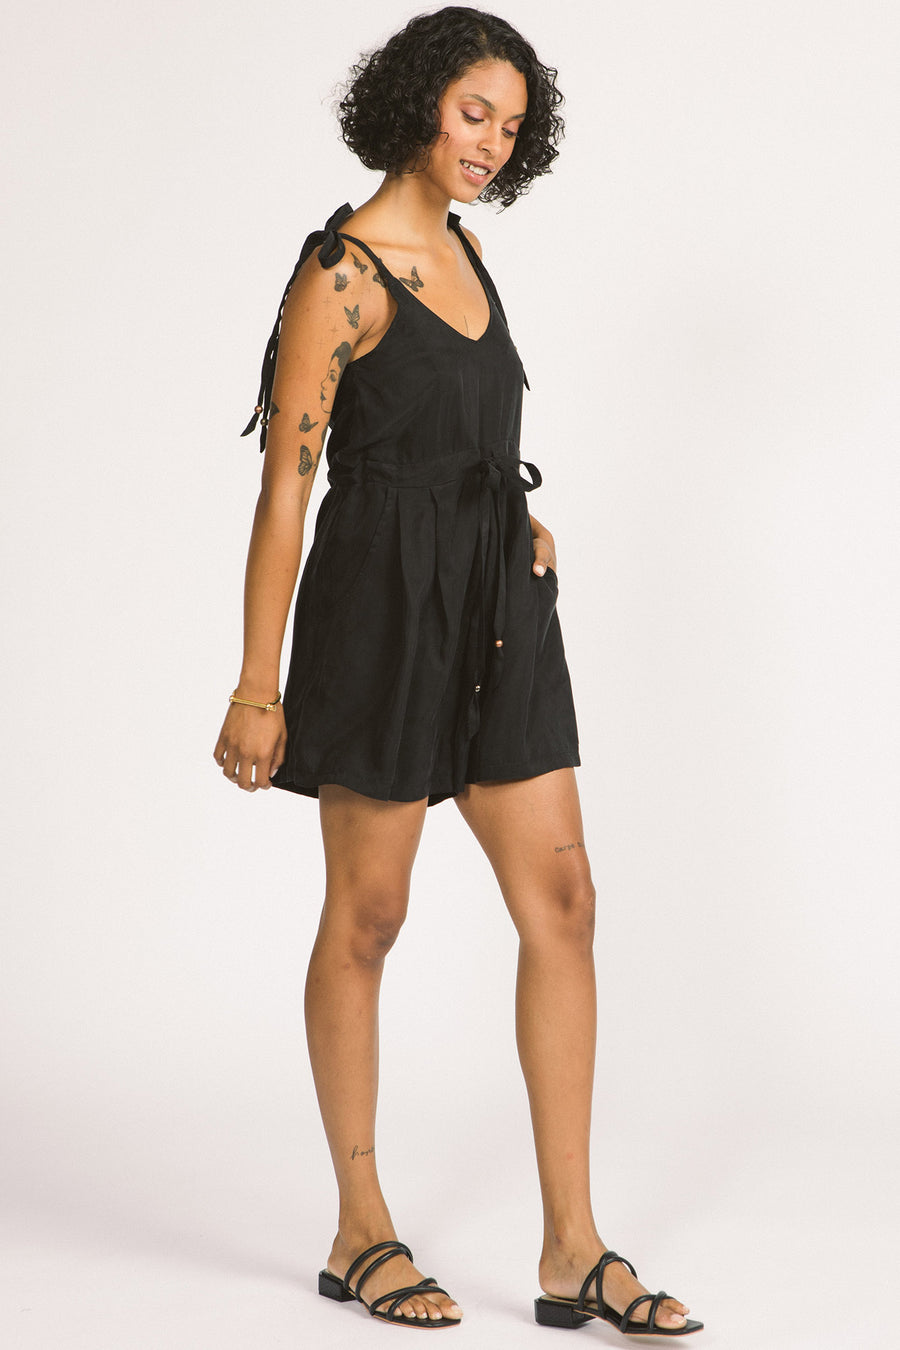 Woman wearing black short Meara short romper by Allison Wonderland. 